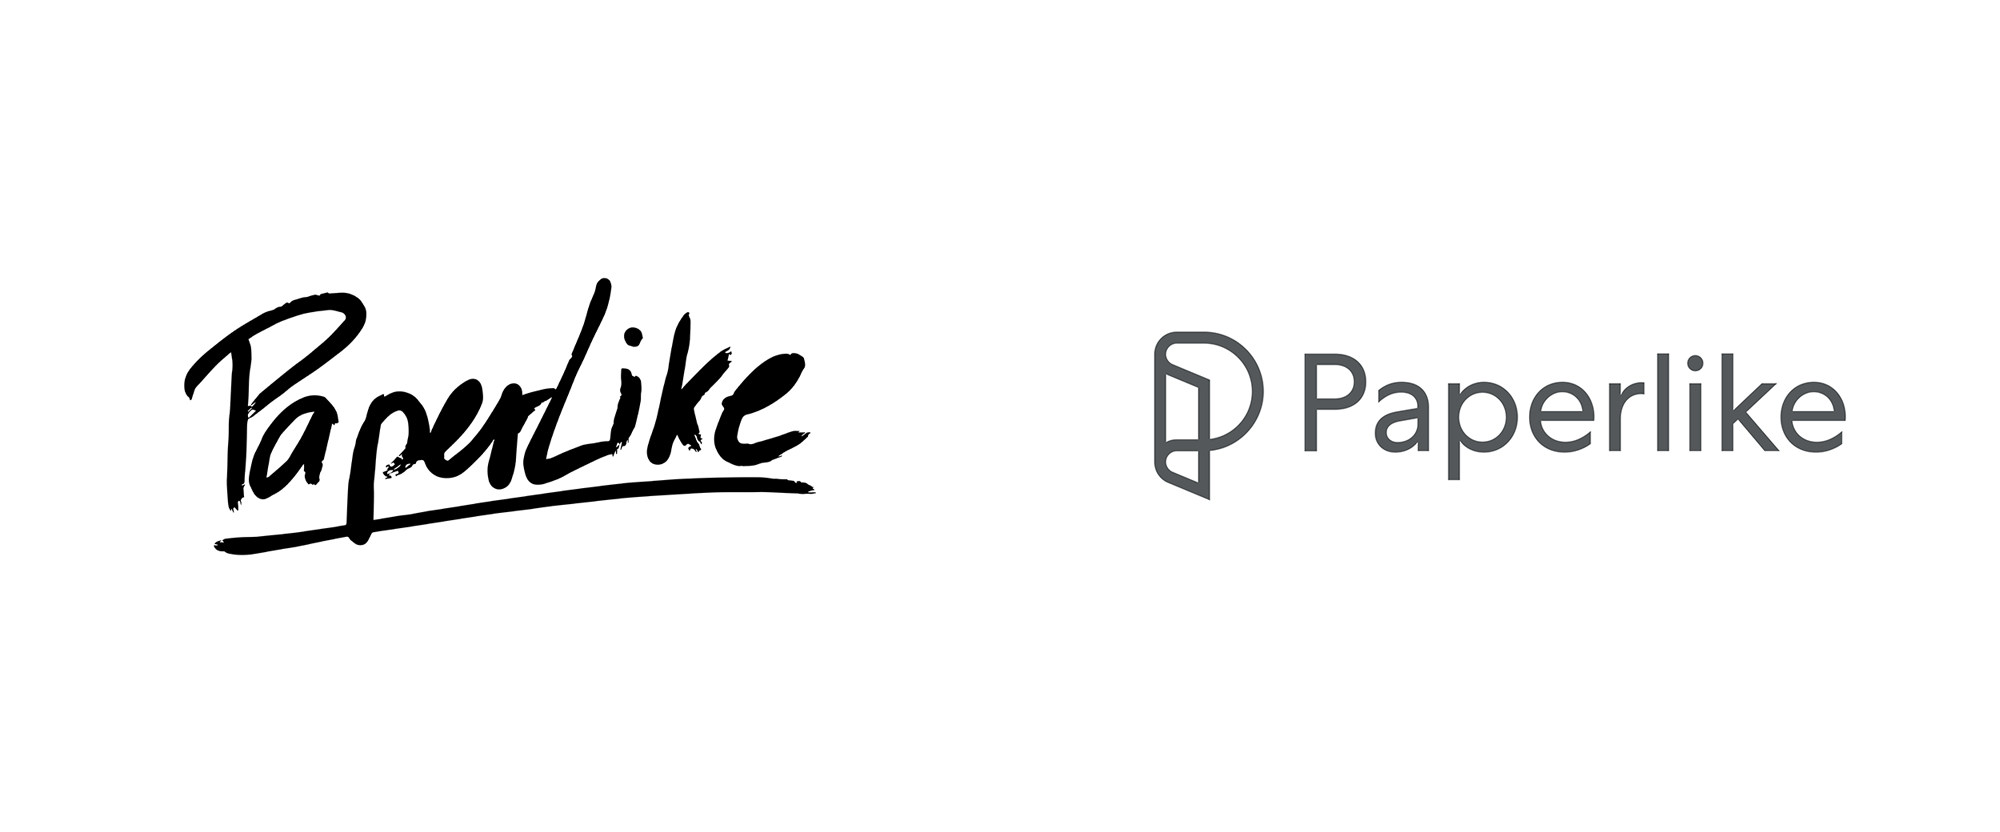 New Logo and Packaging for Paperlike by Daniel Flösser